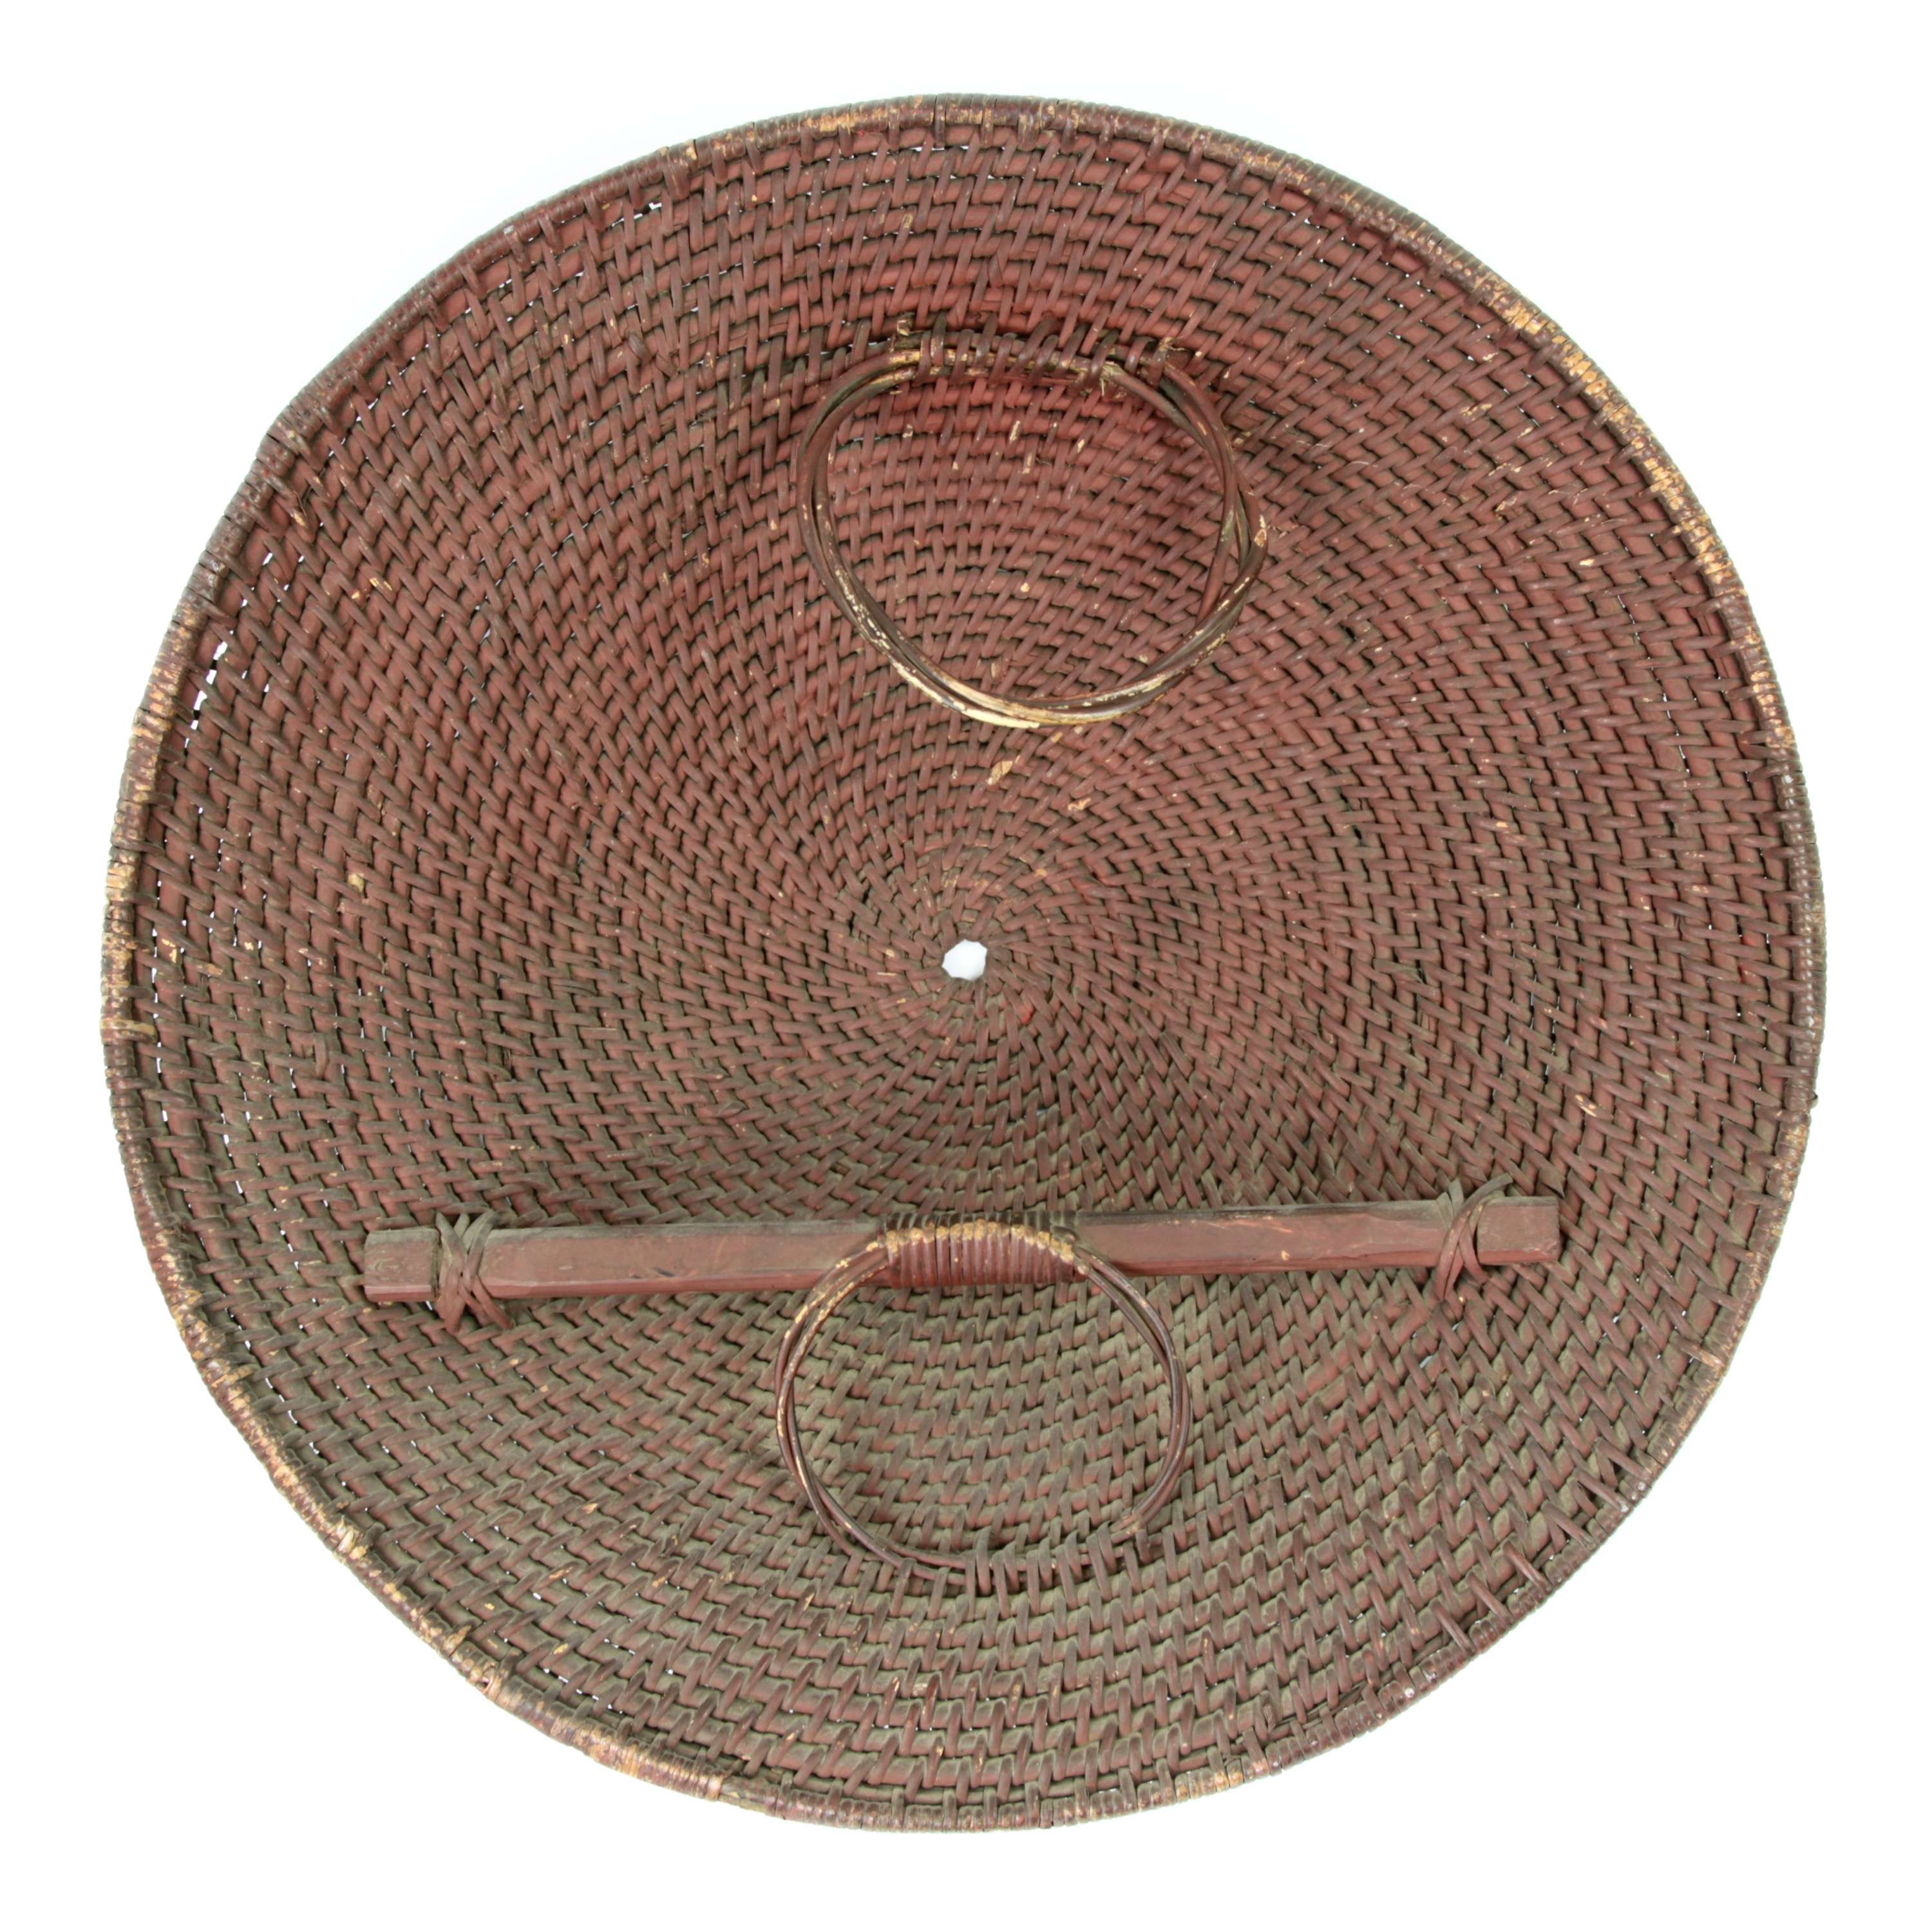 Chinese rattan shield